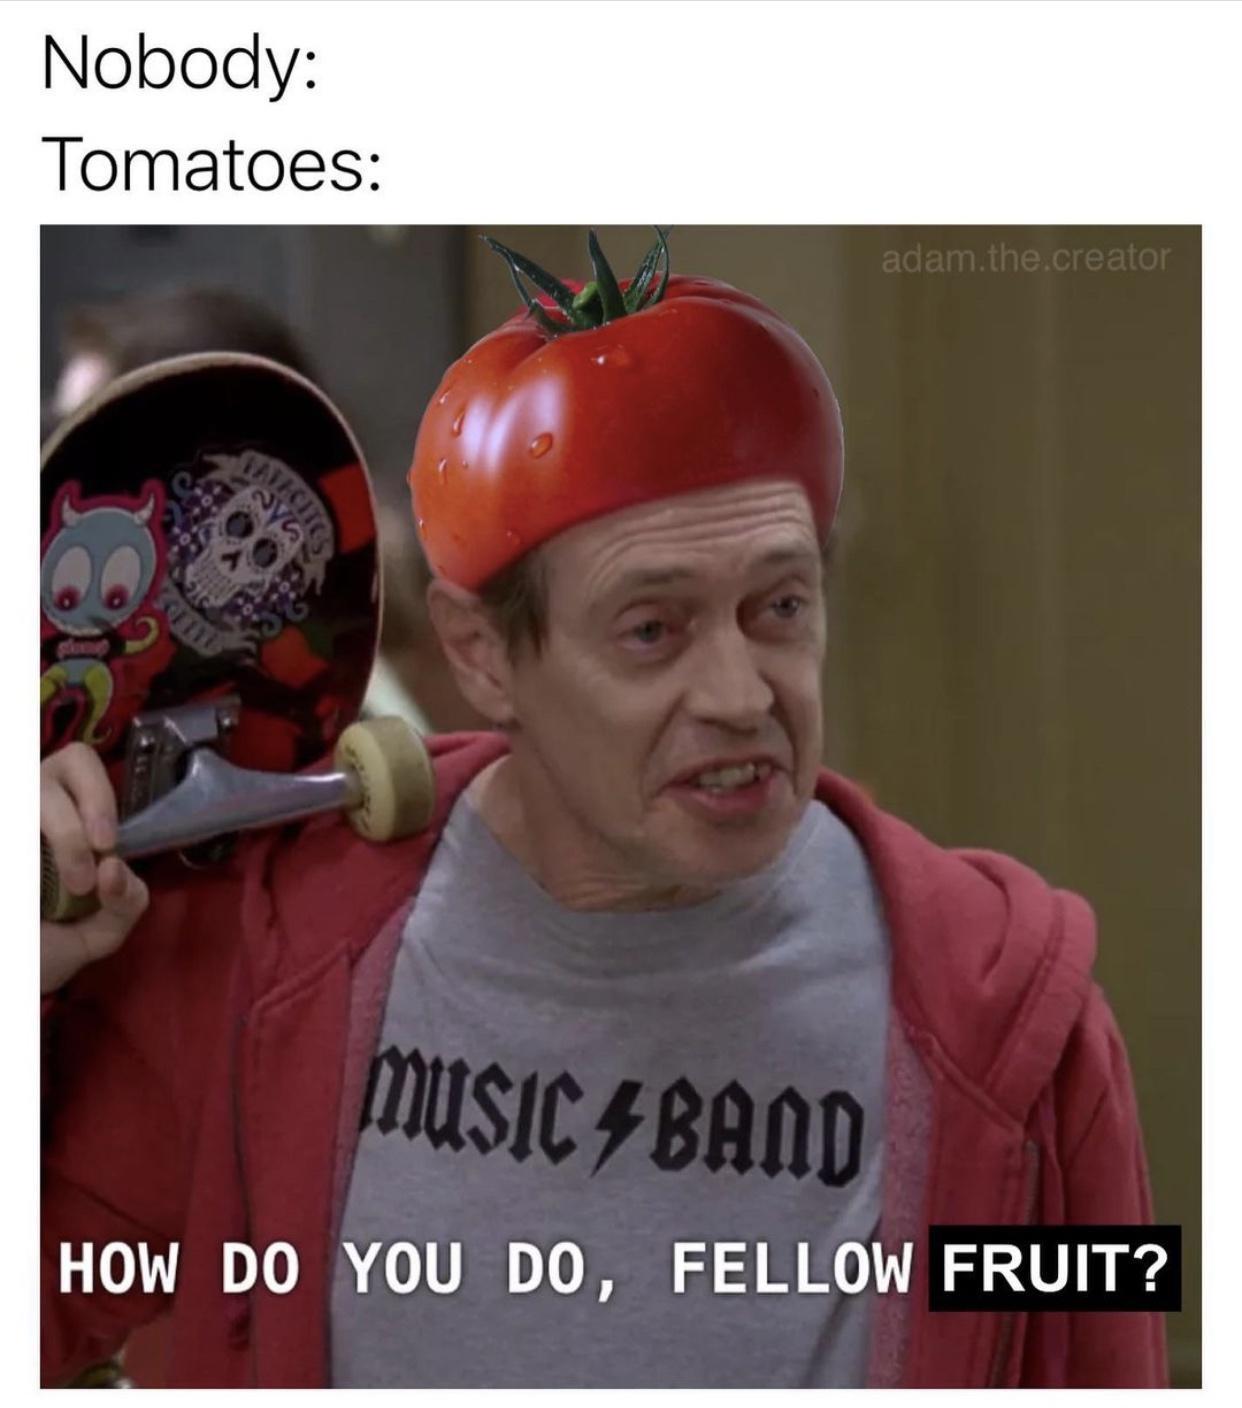 fresh memes - moving forward meme - Nobody Tomatoes adam.the.creator Falcone Music 4 Band How Do You Do, Fellow Fruit?